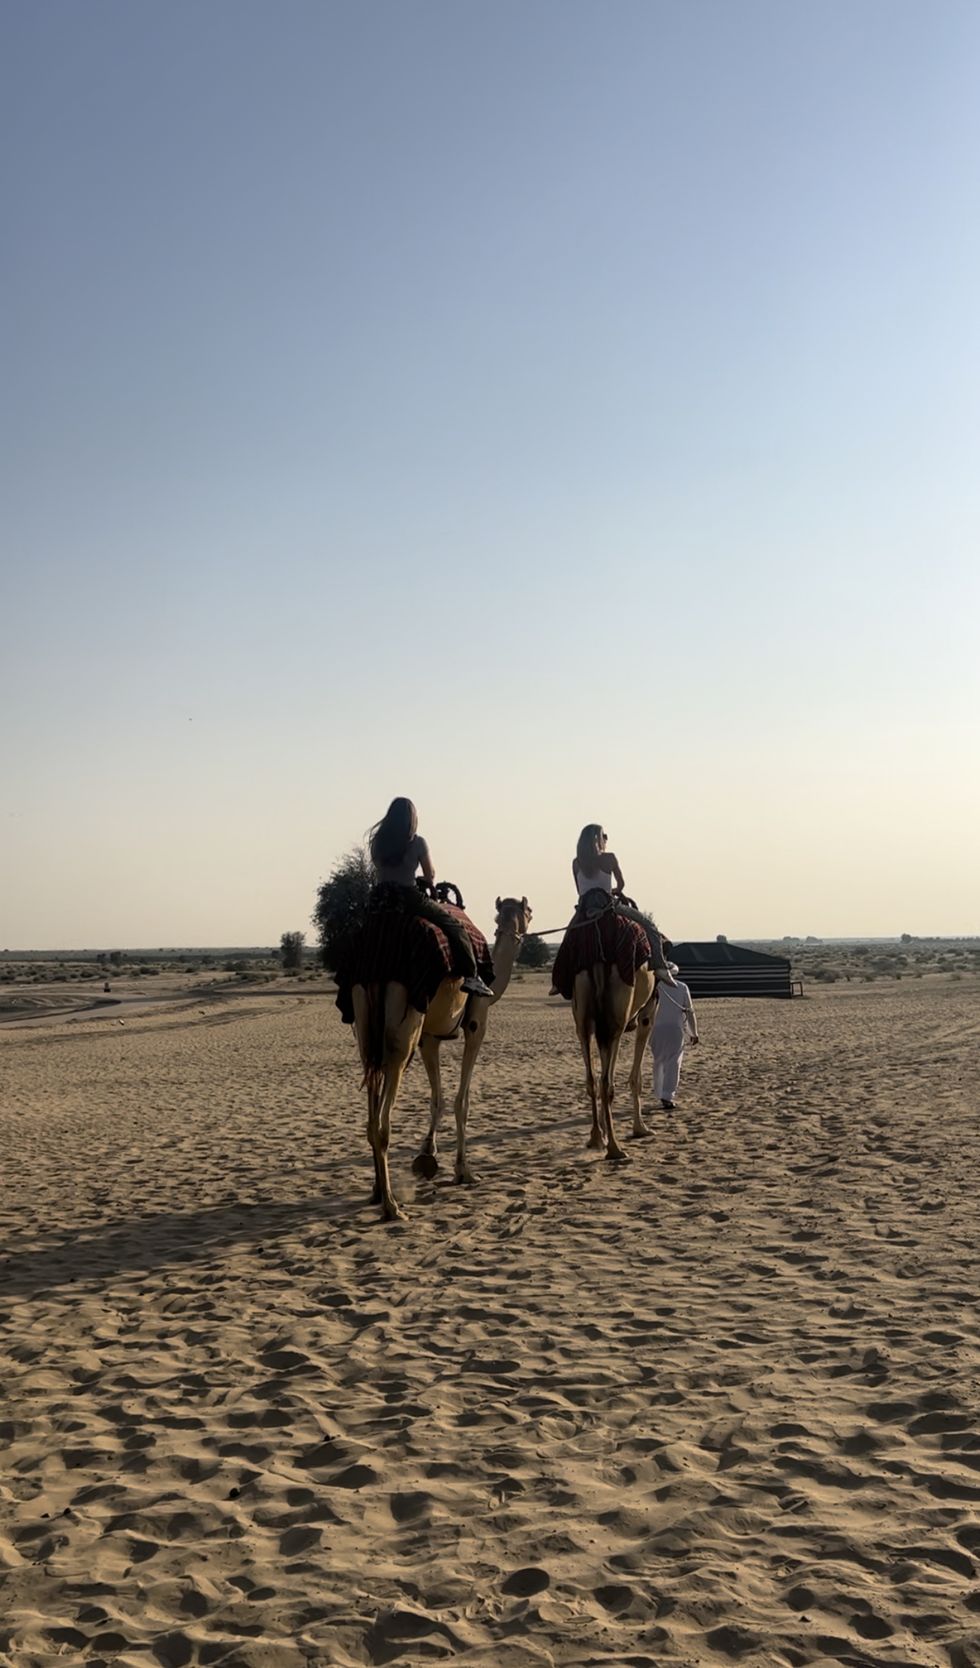 dubai travel review wellness hotel desert women's health relaxation luxury travel